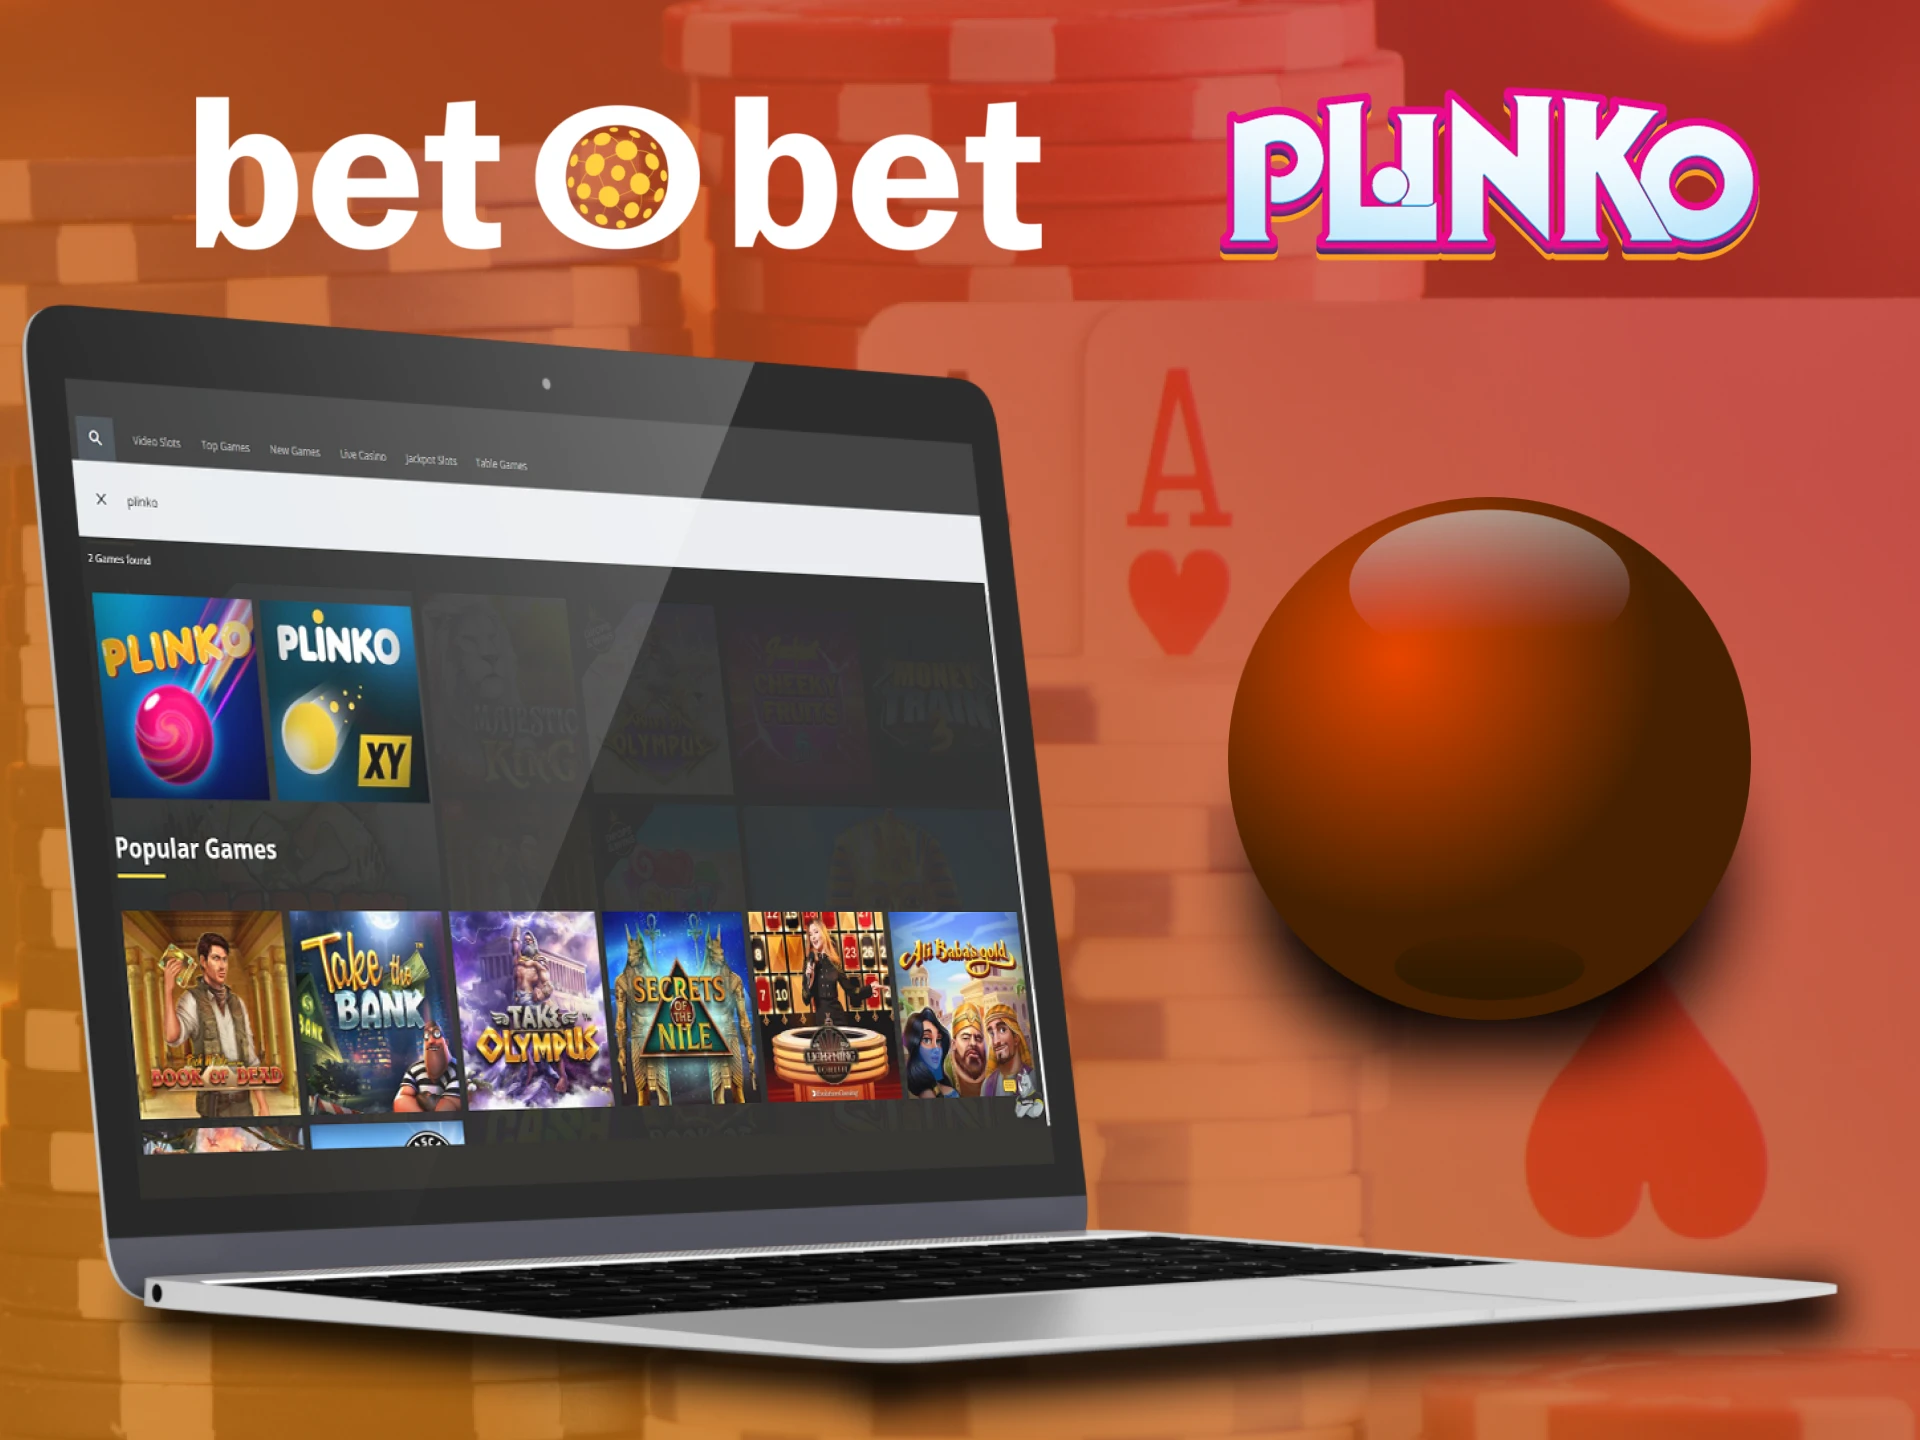 Play Plinko on the BetoBet website.